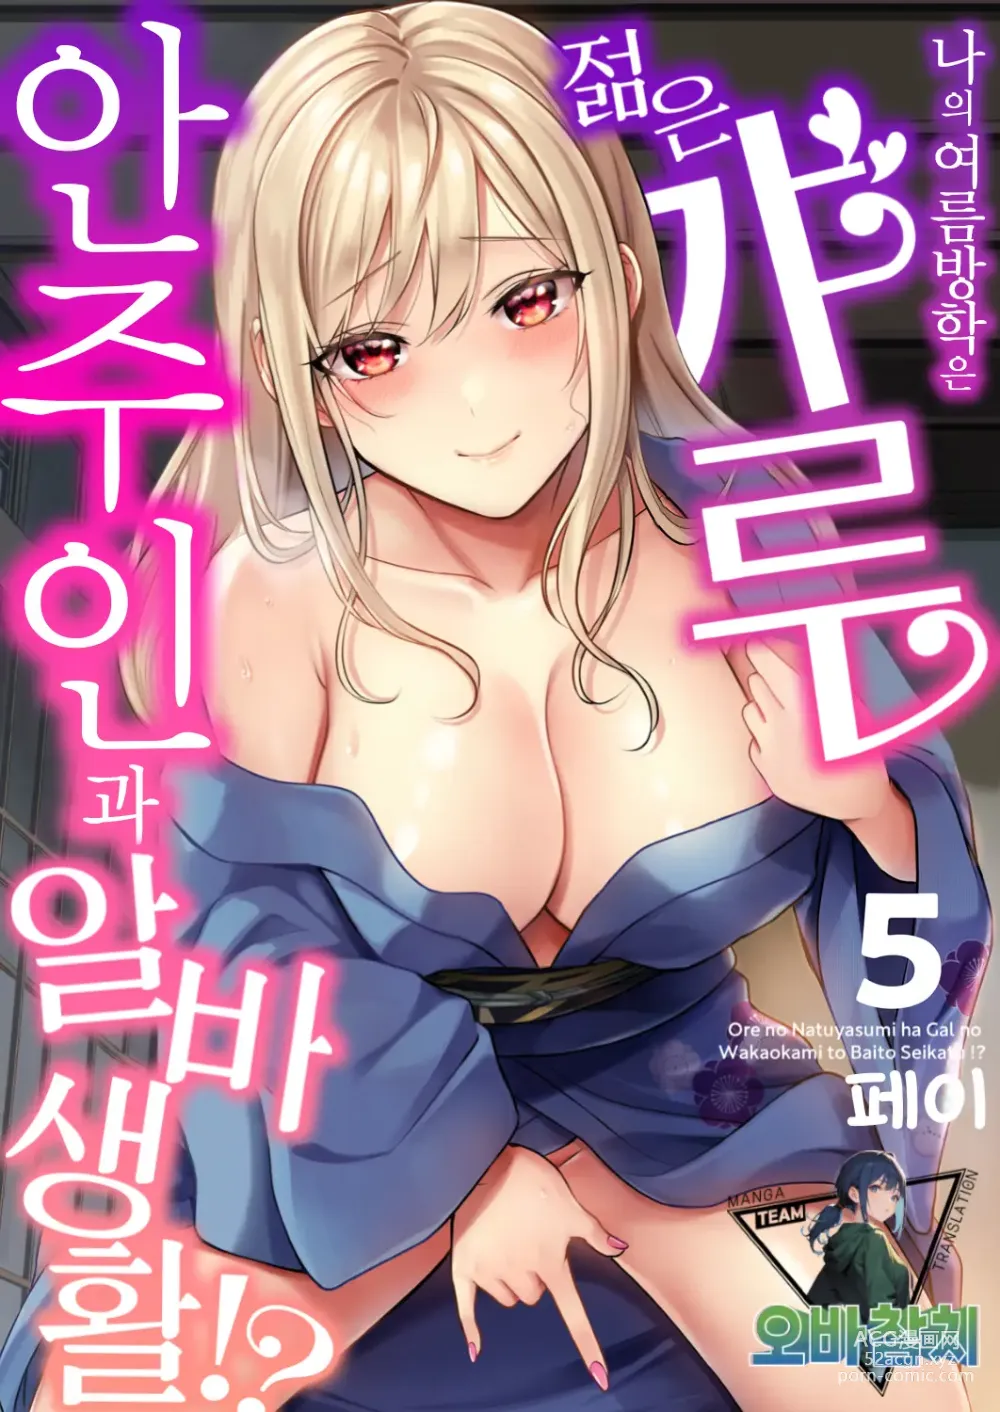 Page 1 of manga 내 여름방학은 젊은 갸루 안주인과 알바 생활?! 5